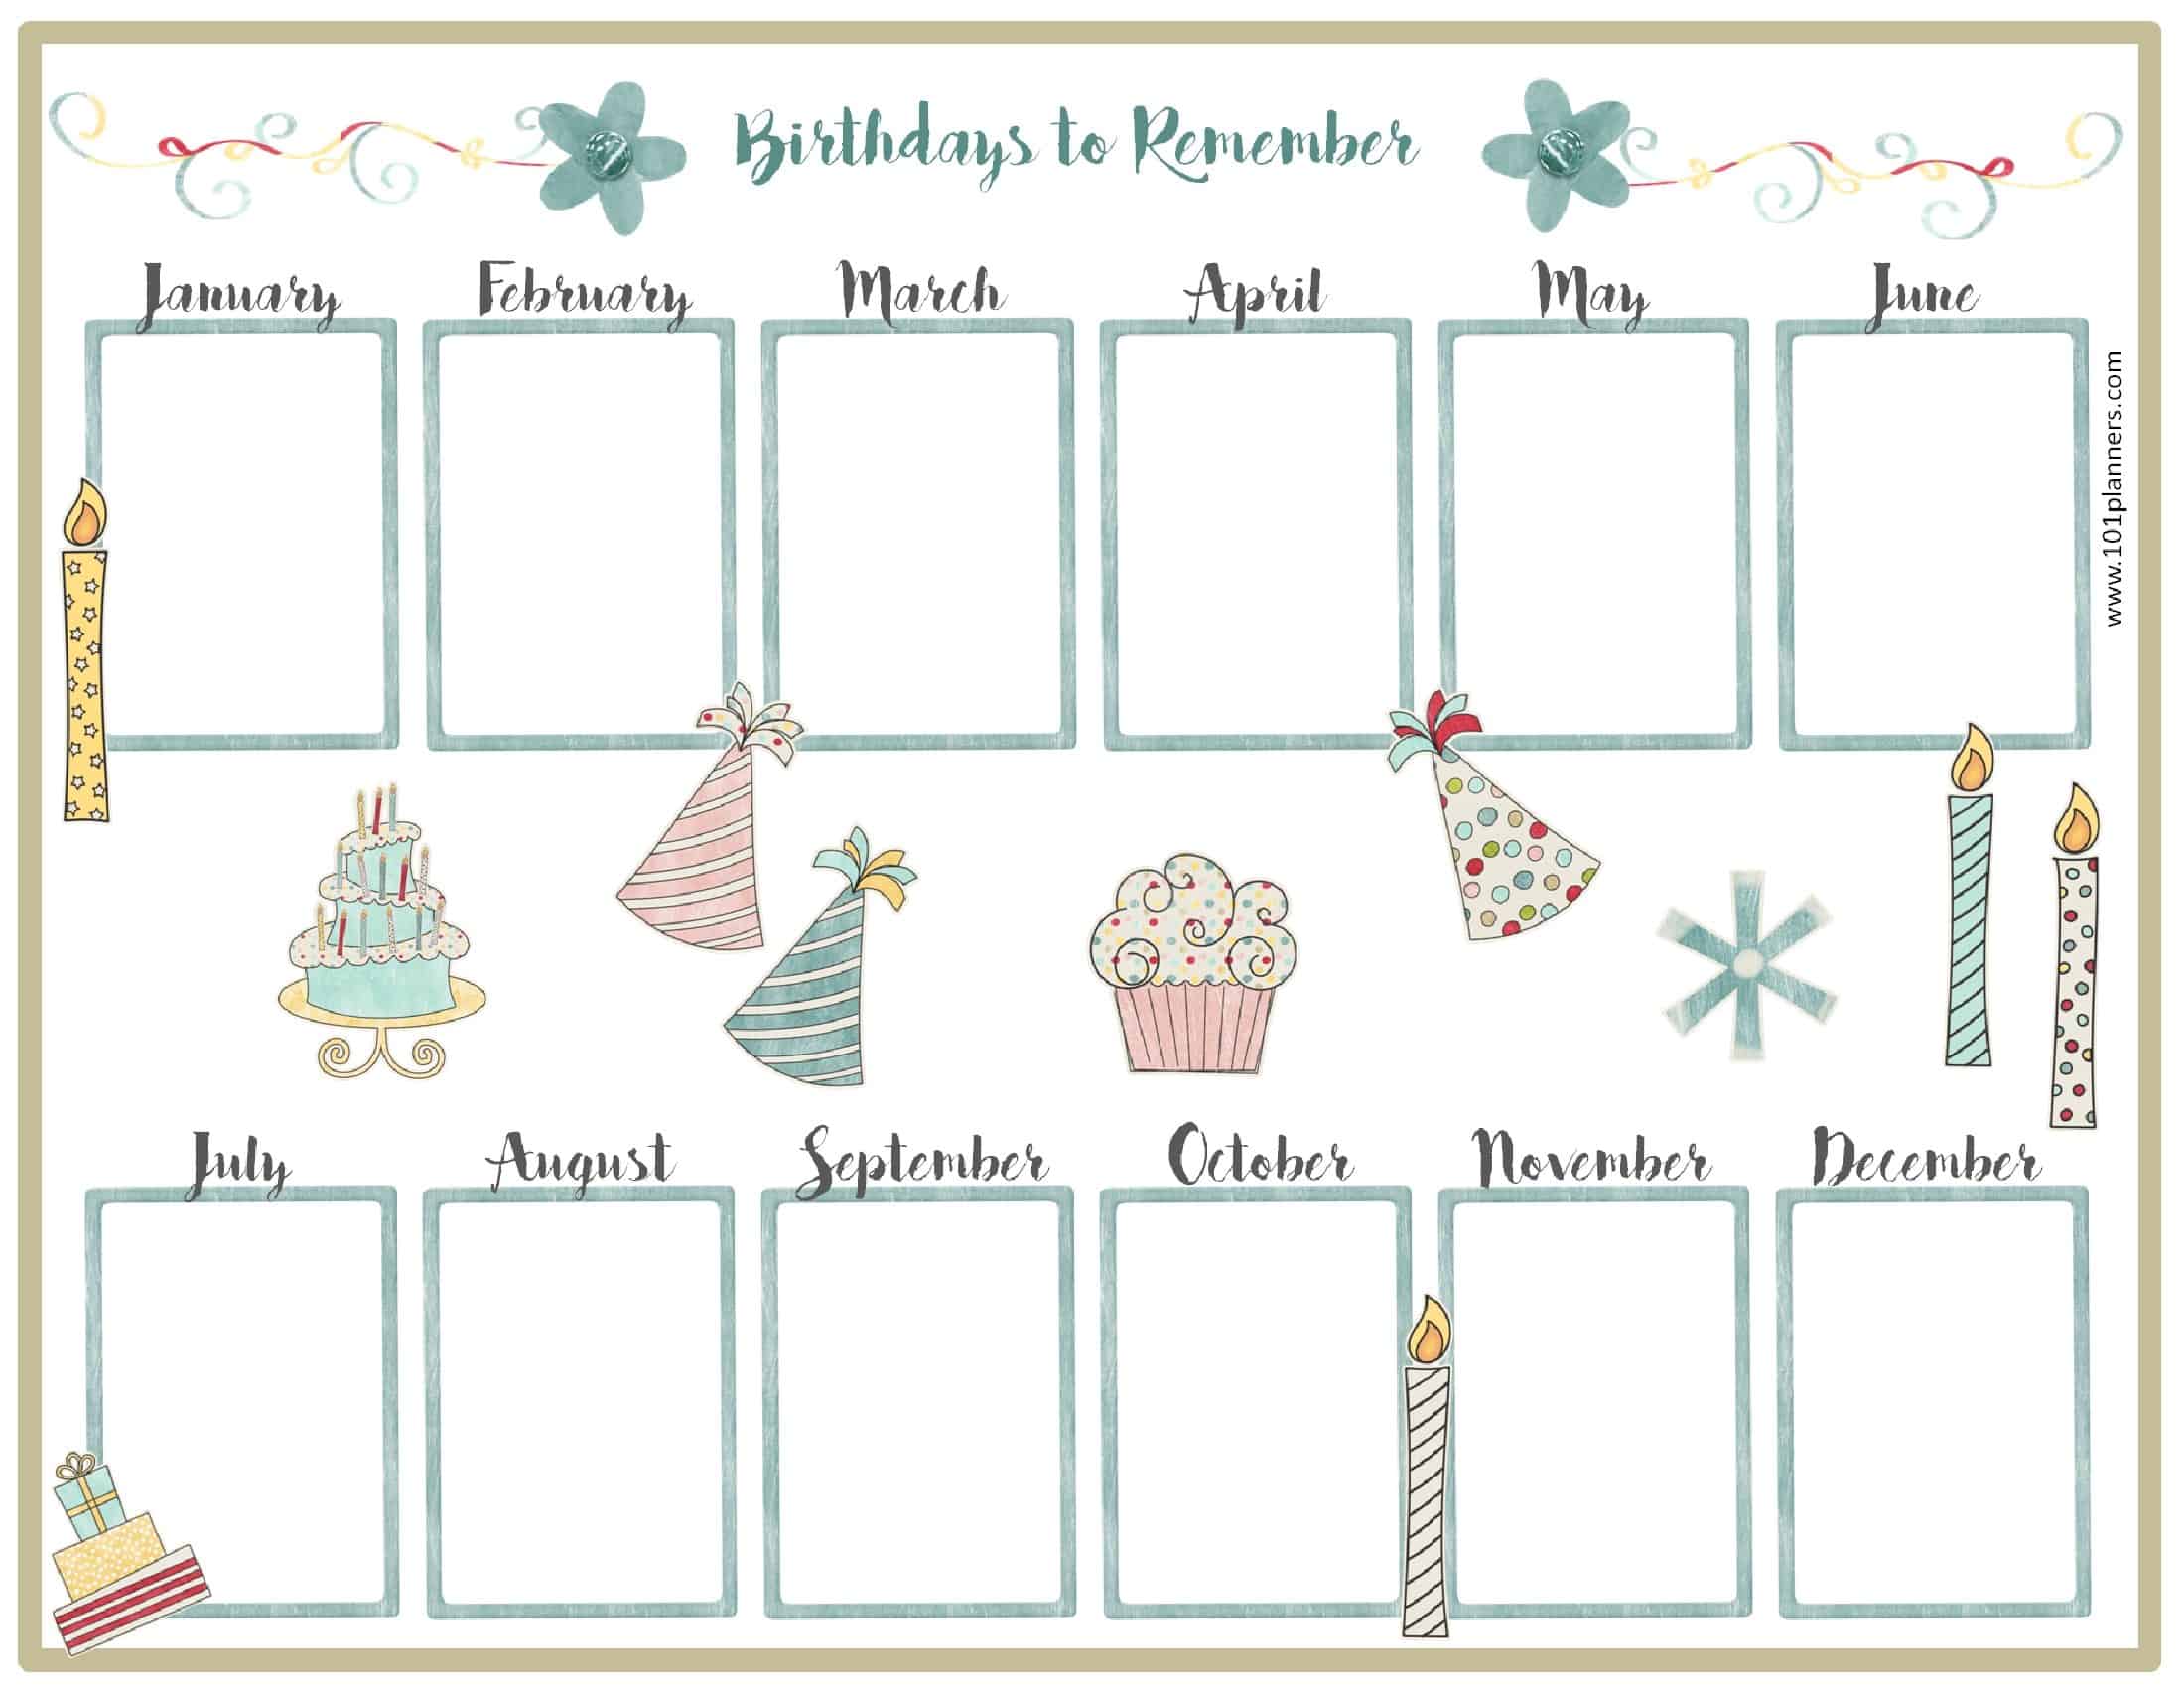 Free Birthday Calendar | Customize Online & Print at Home